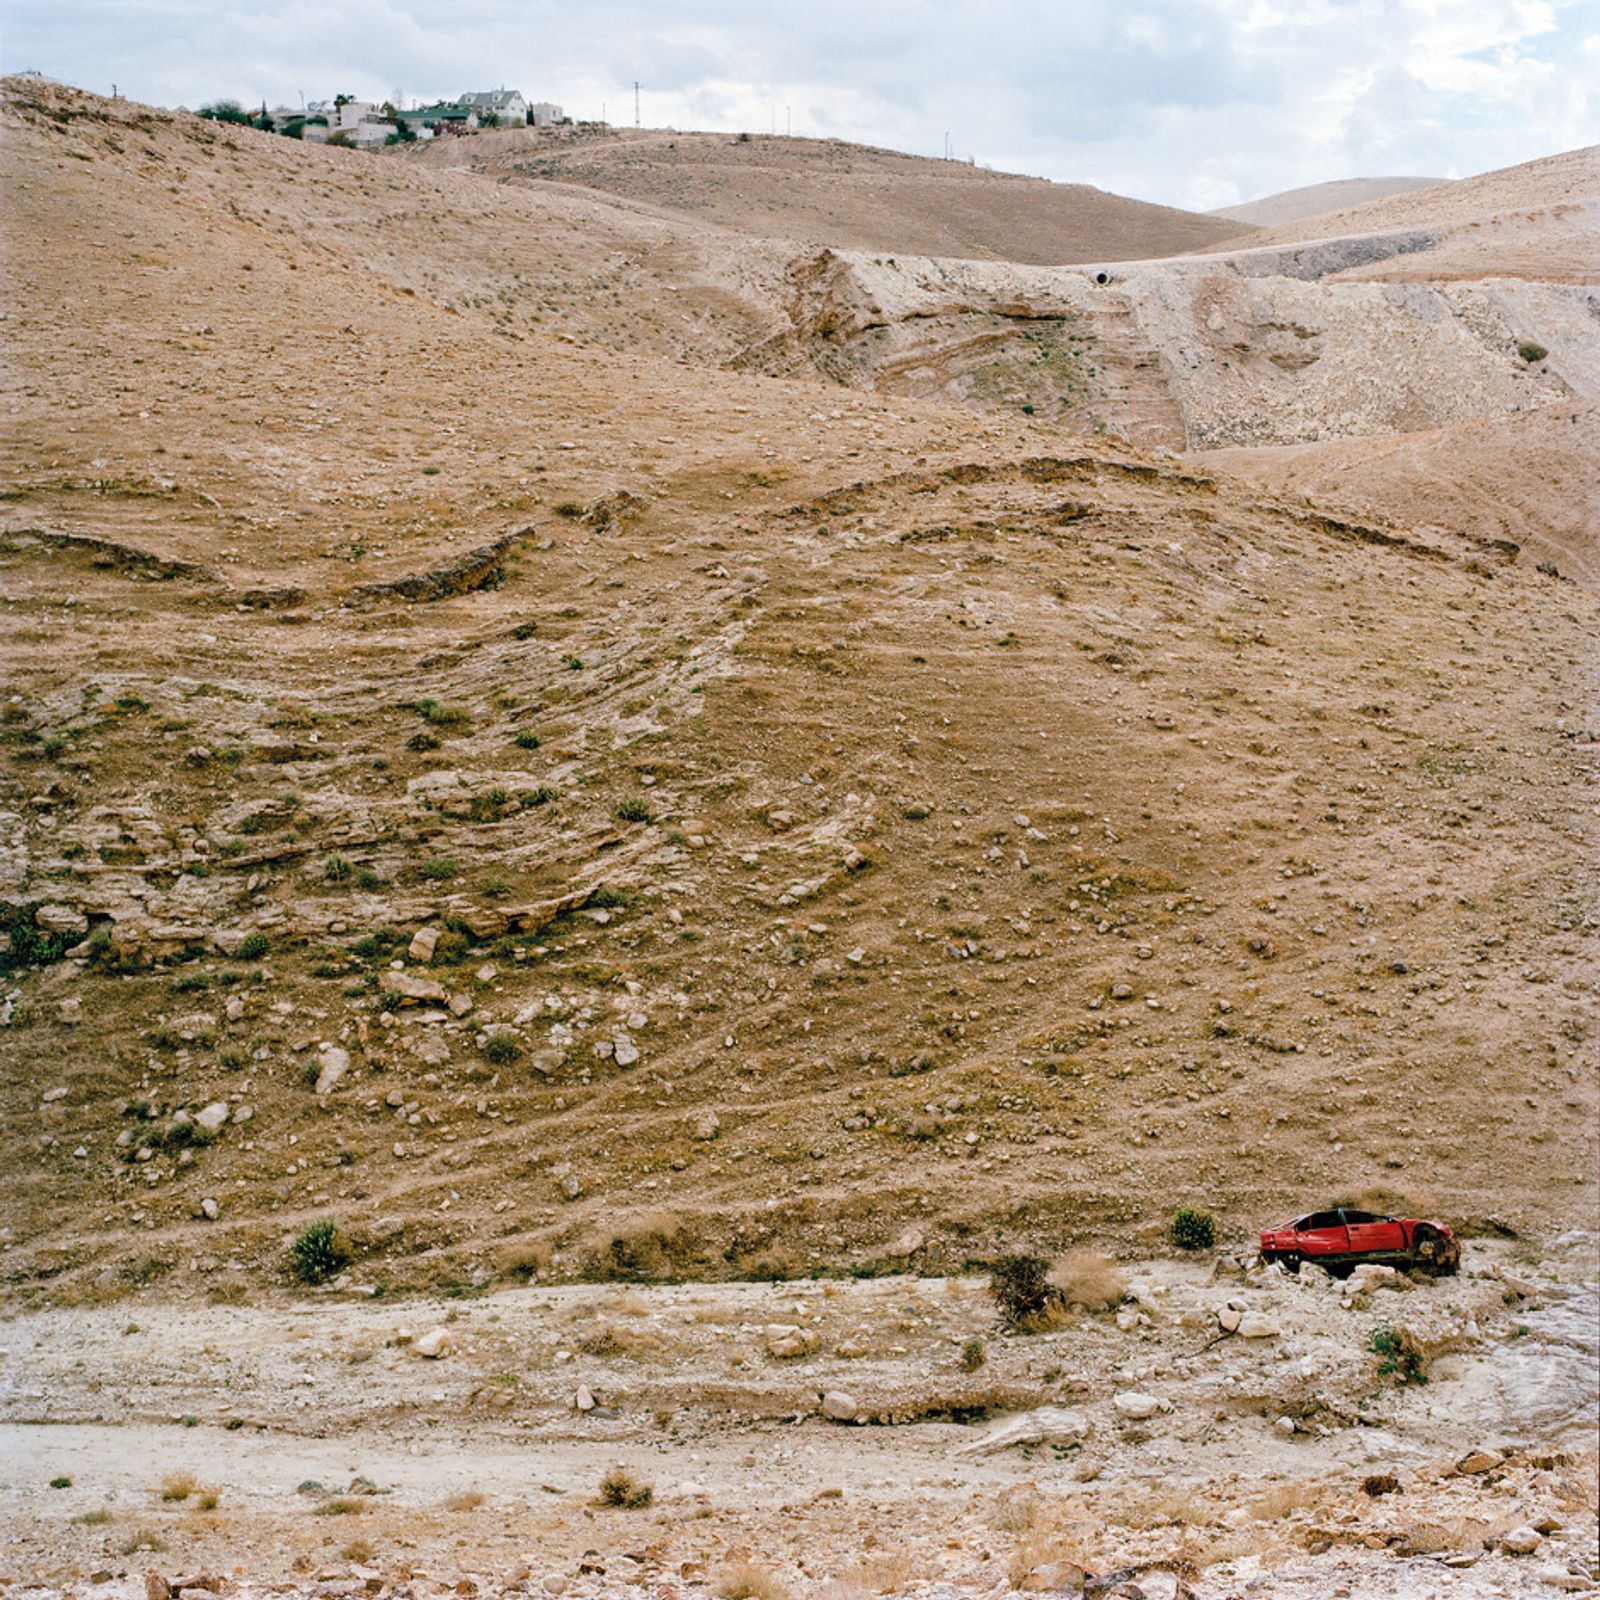 © Federico Busonero - Wrecked car in Wadi Qelt, Israeli settlement above, Palestine.